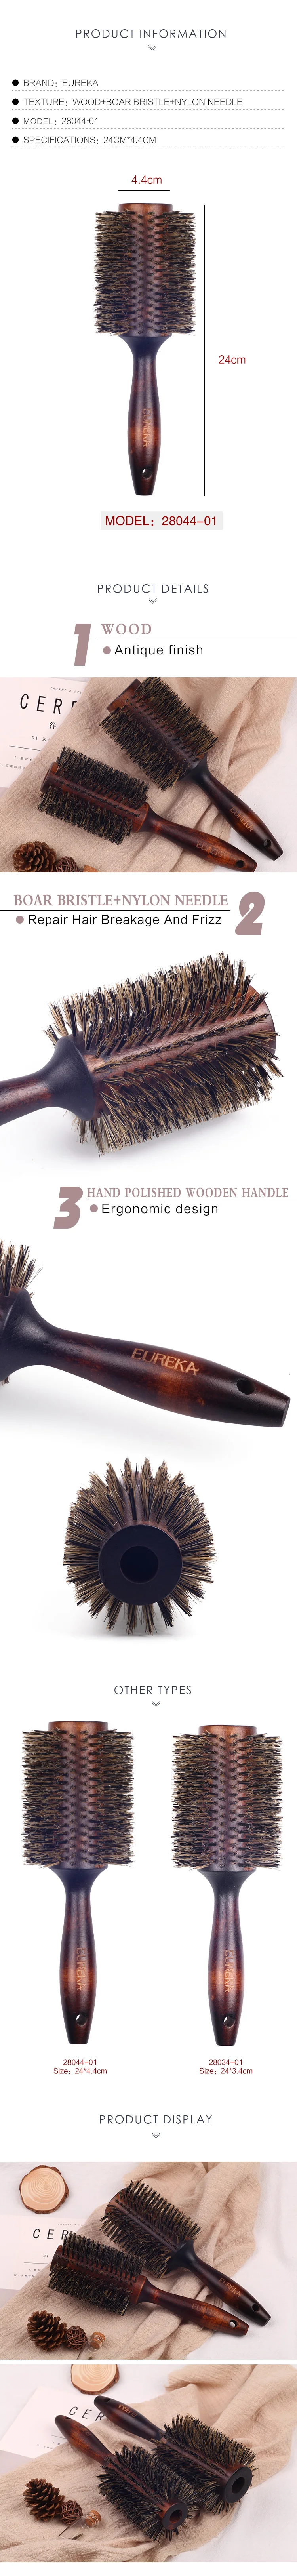 EUREKA 28044-01 Professional Boar Bristle Nylon Pins Round Brush Wooden Hair Brush